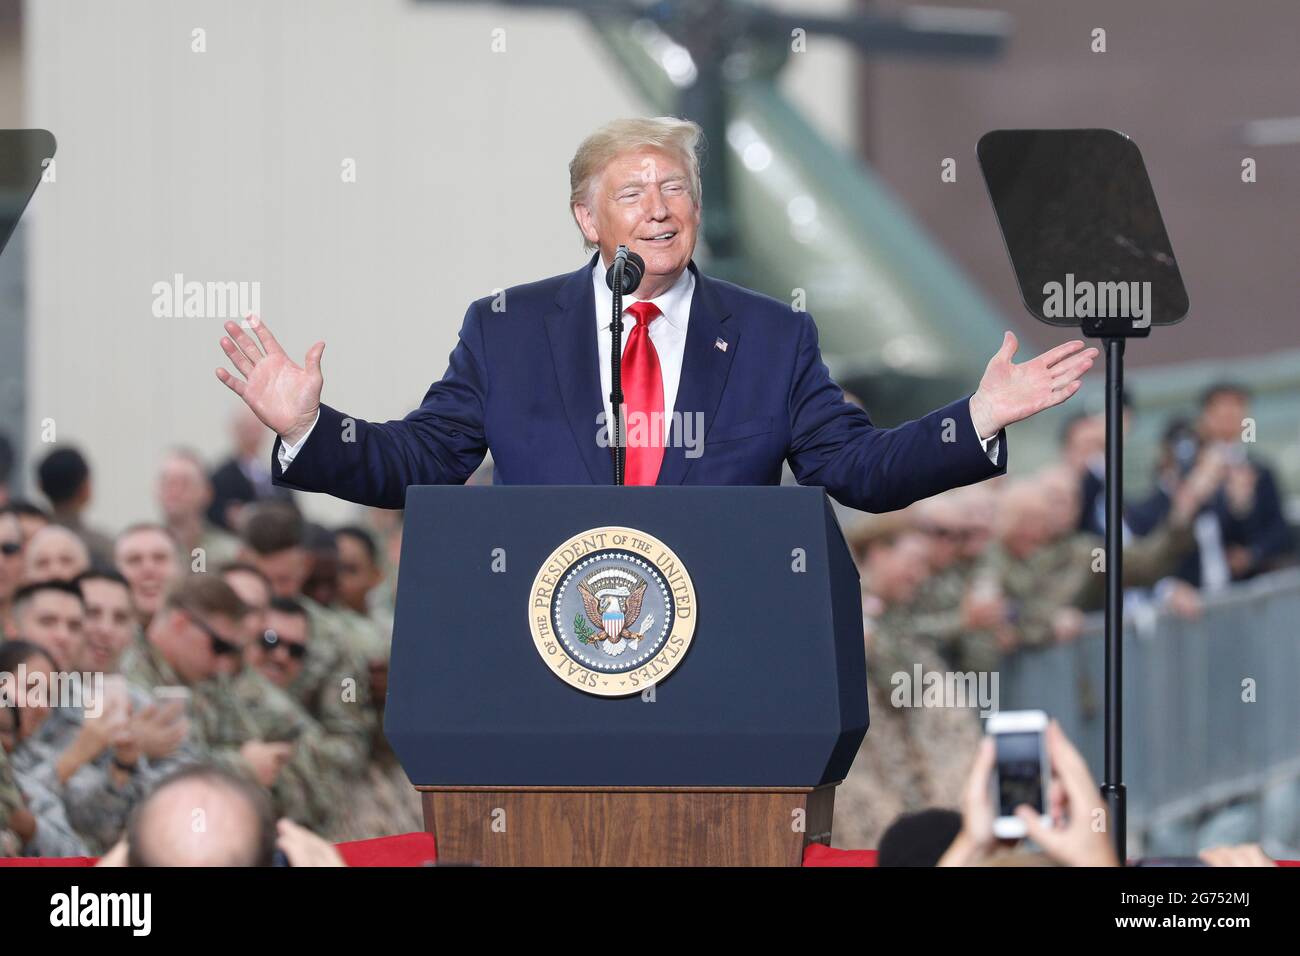 Donald trump speech hi-res stock photography and images - Alamy